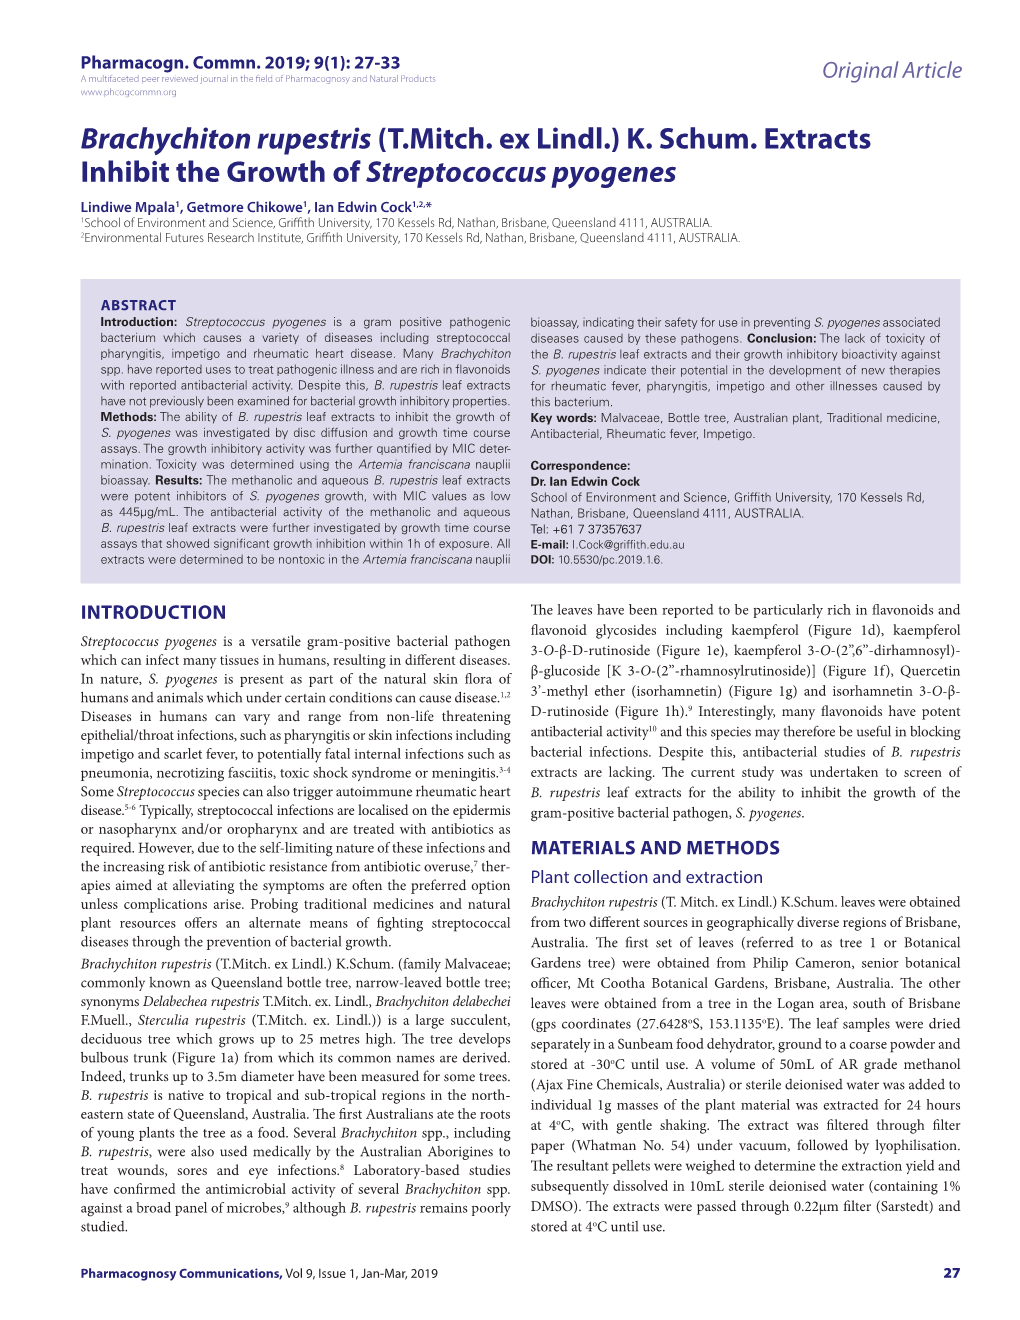 Brachychiton Rupestris (T.Mitch. Ex Lindl.) K. Schum. Extracts Inhibit the Growth of Streptococcus Pyogenes